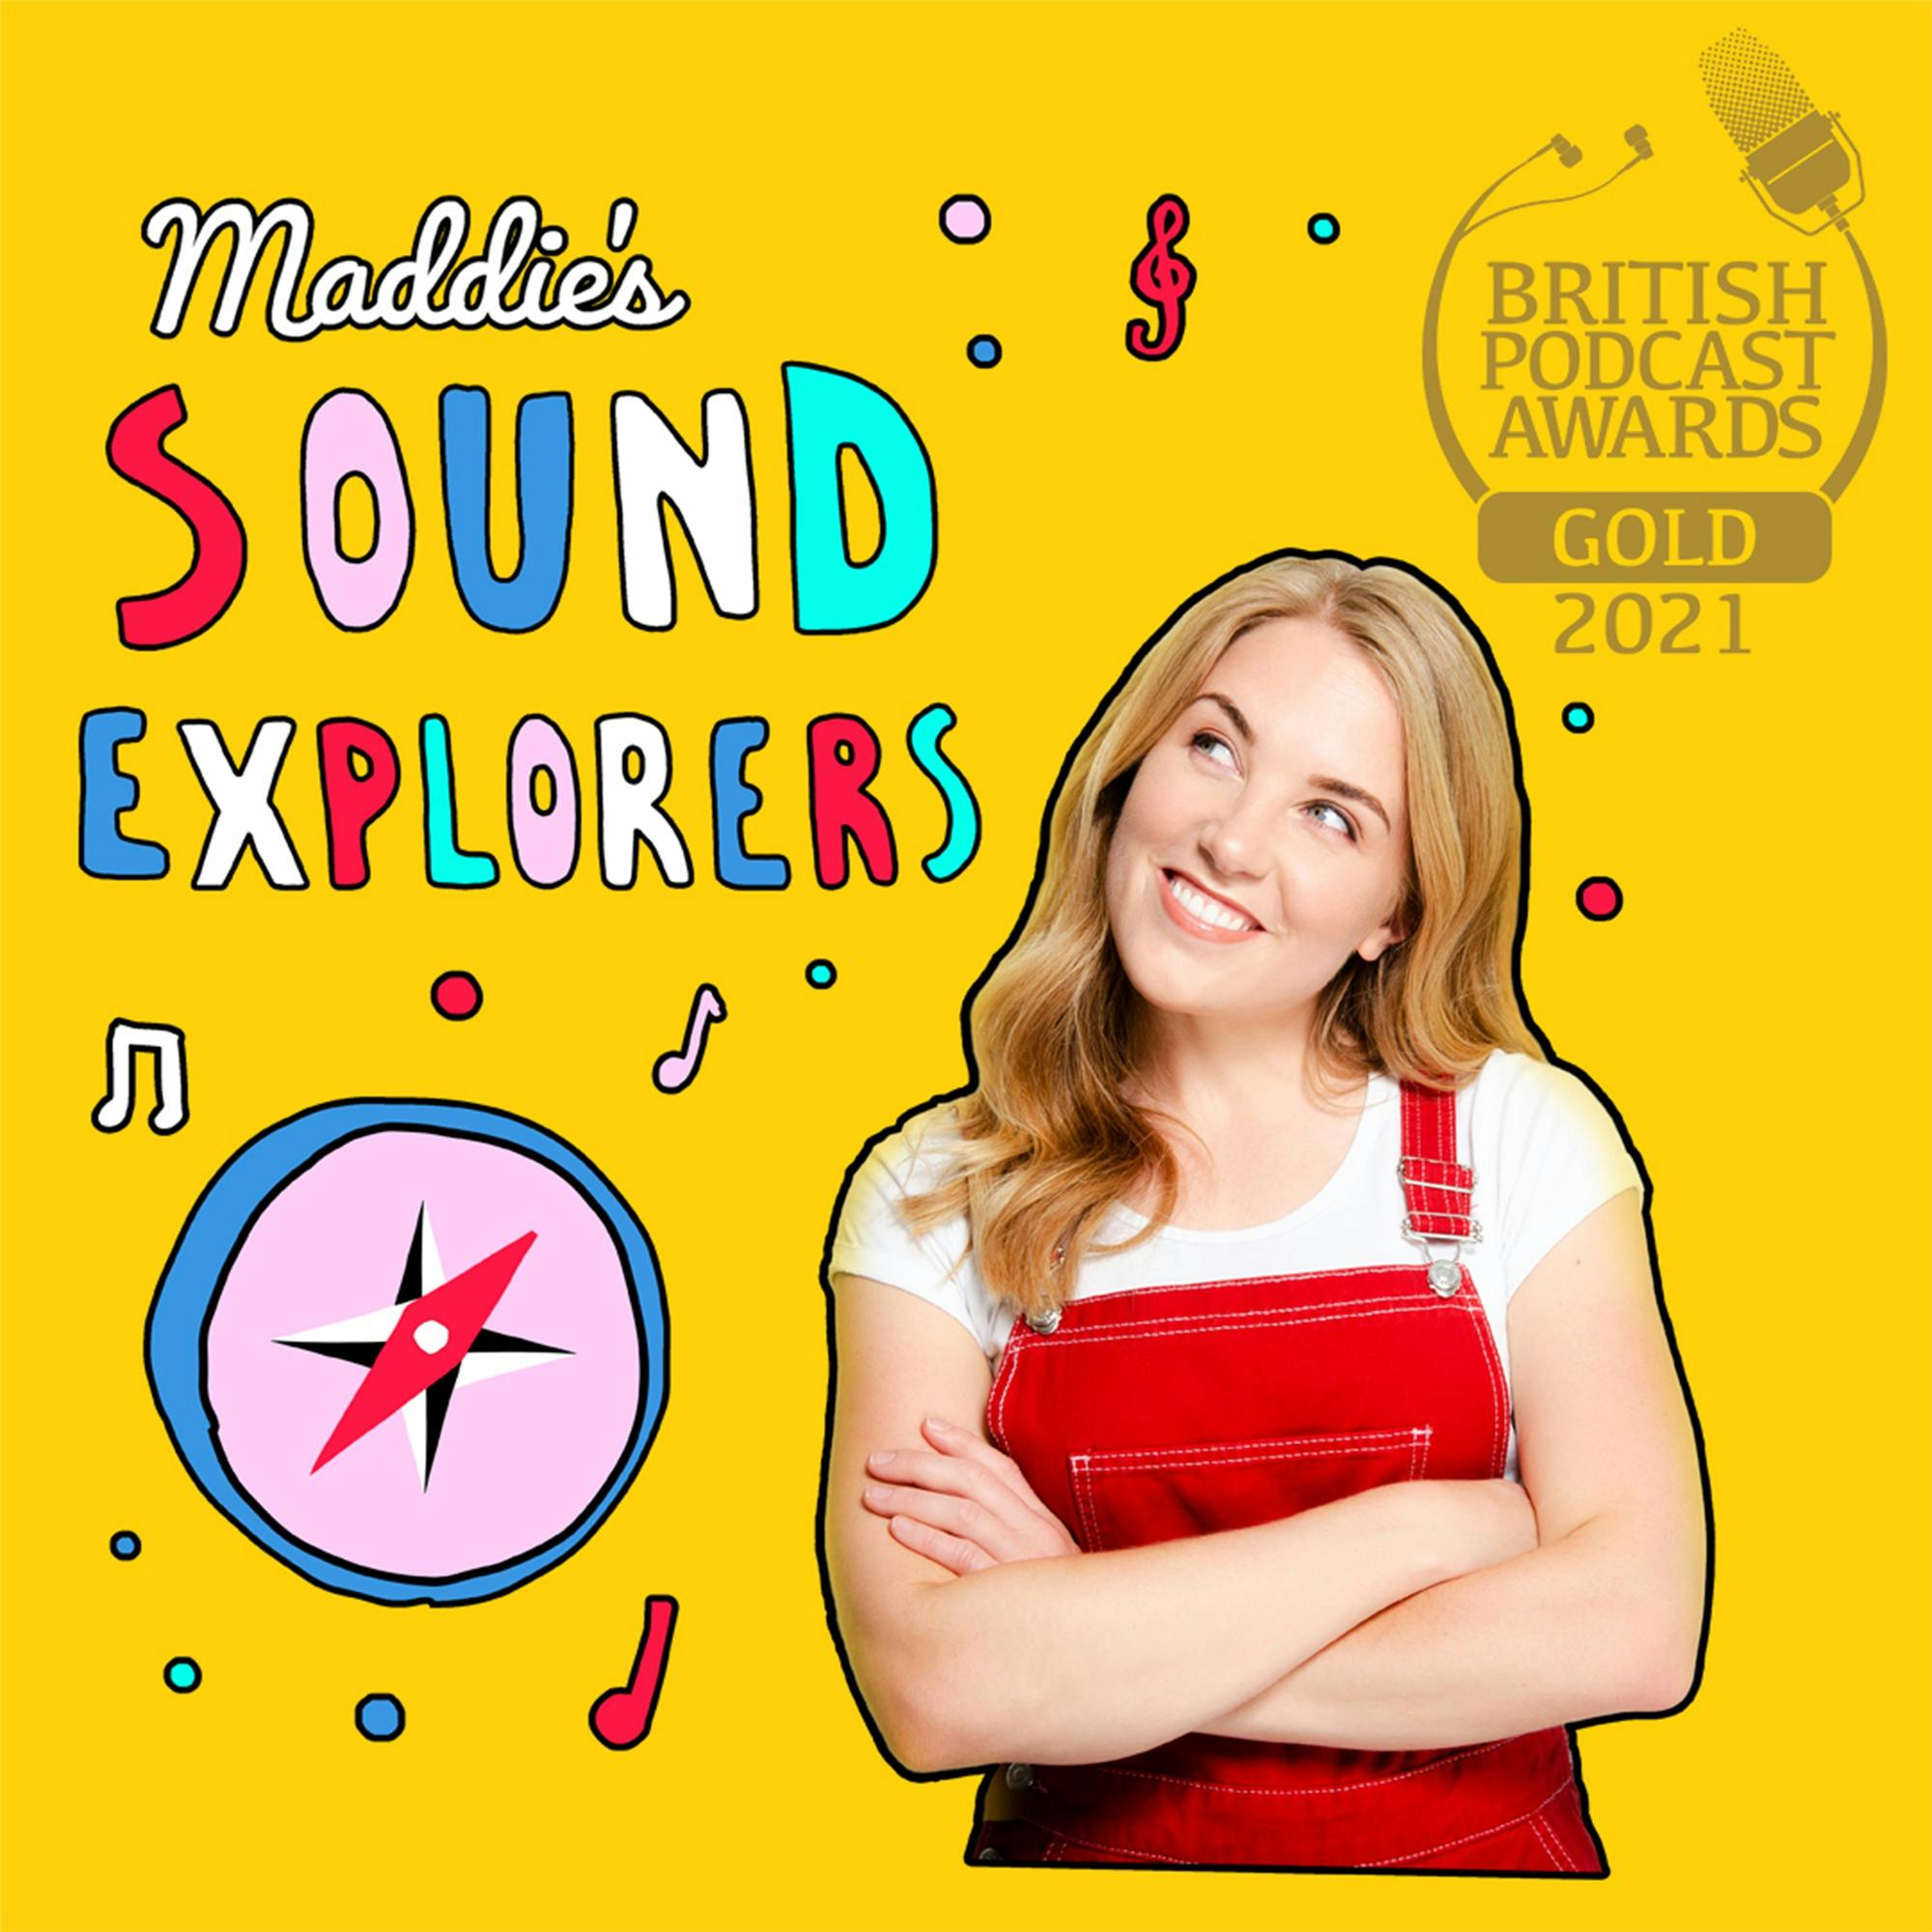 Maddie's Sound Explorers podcast show image